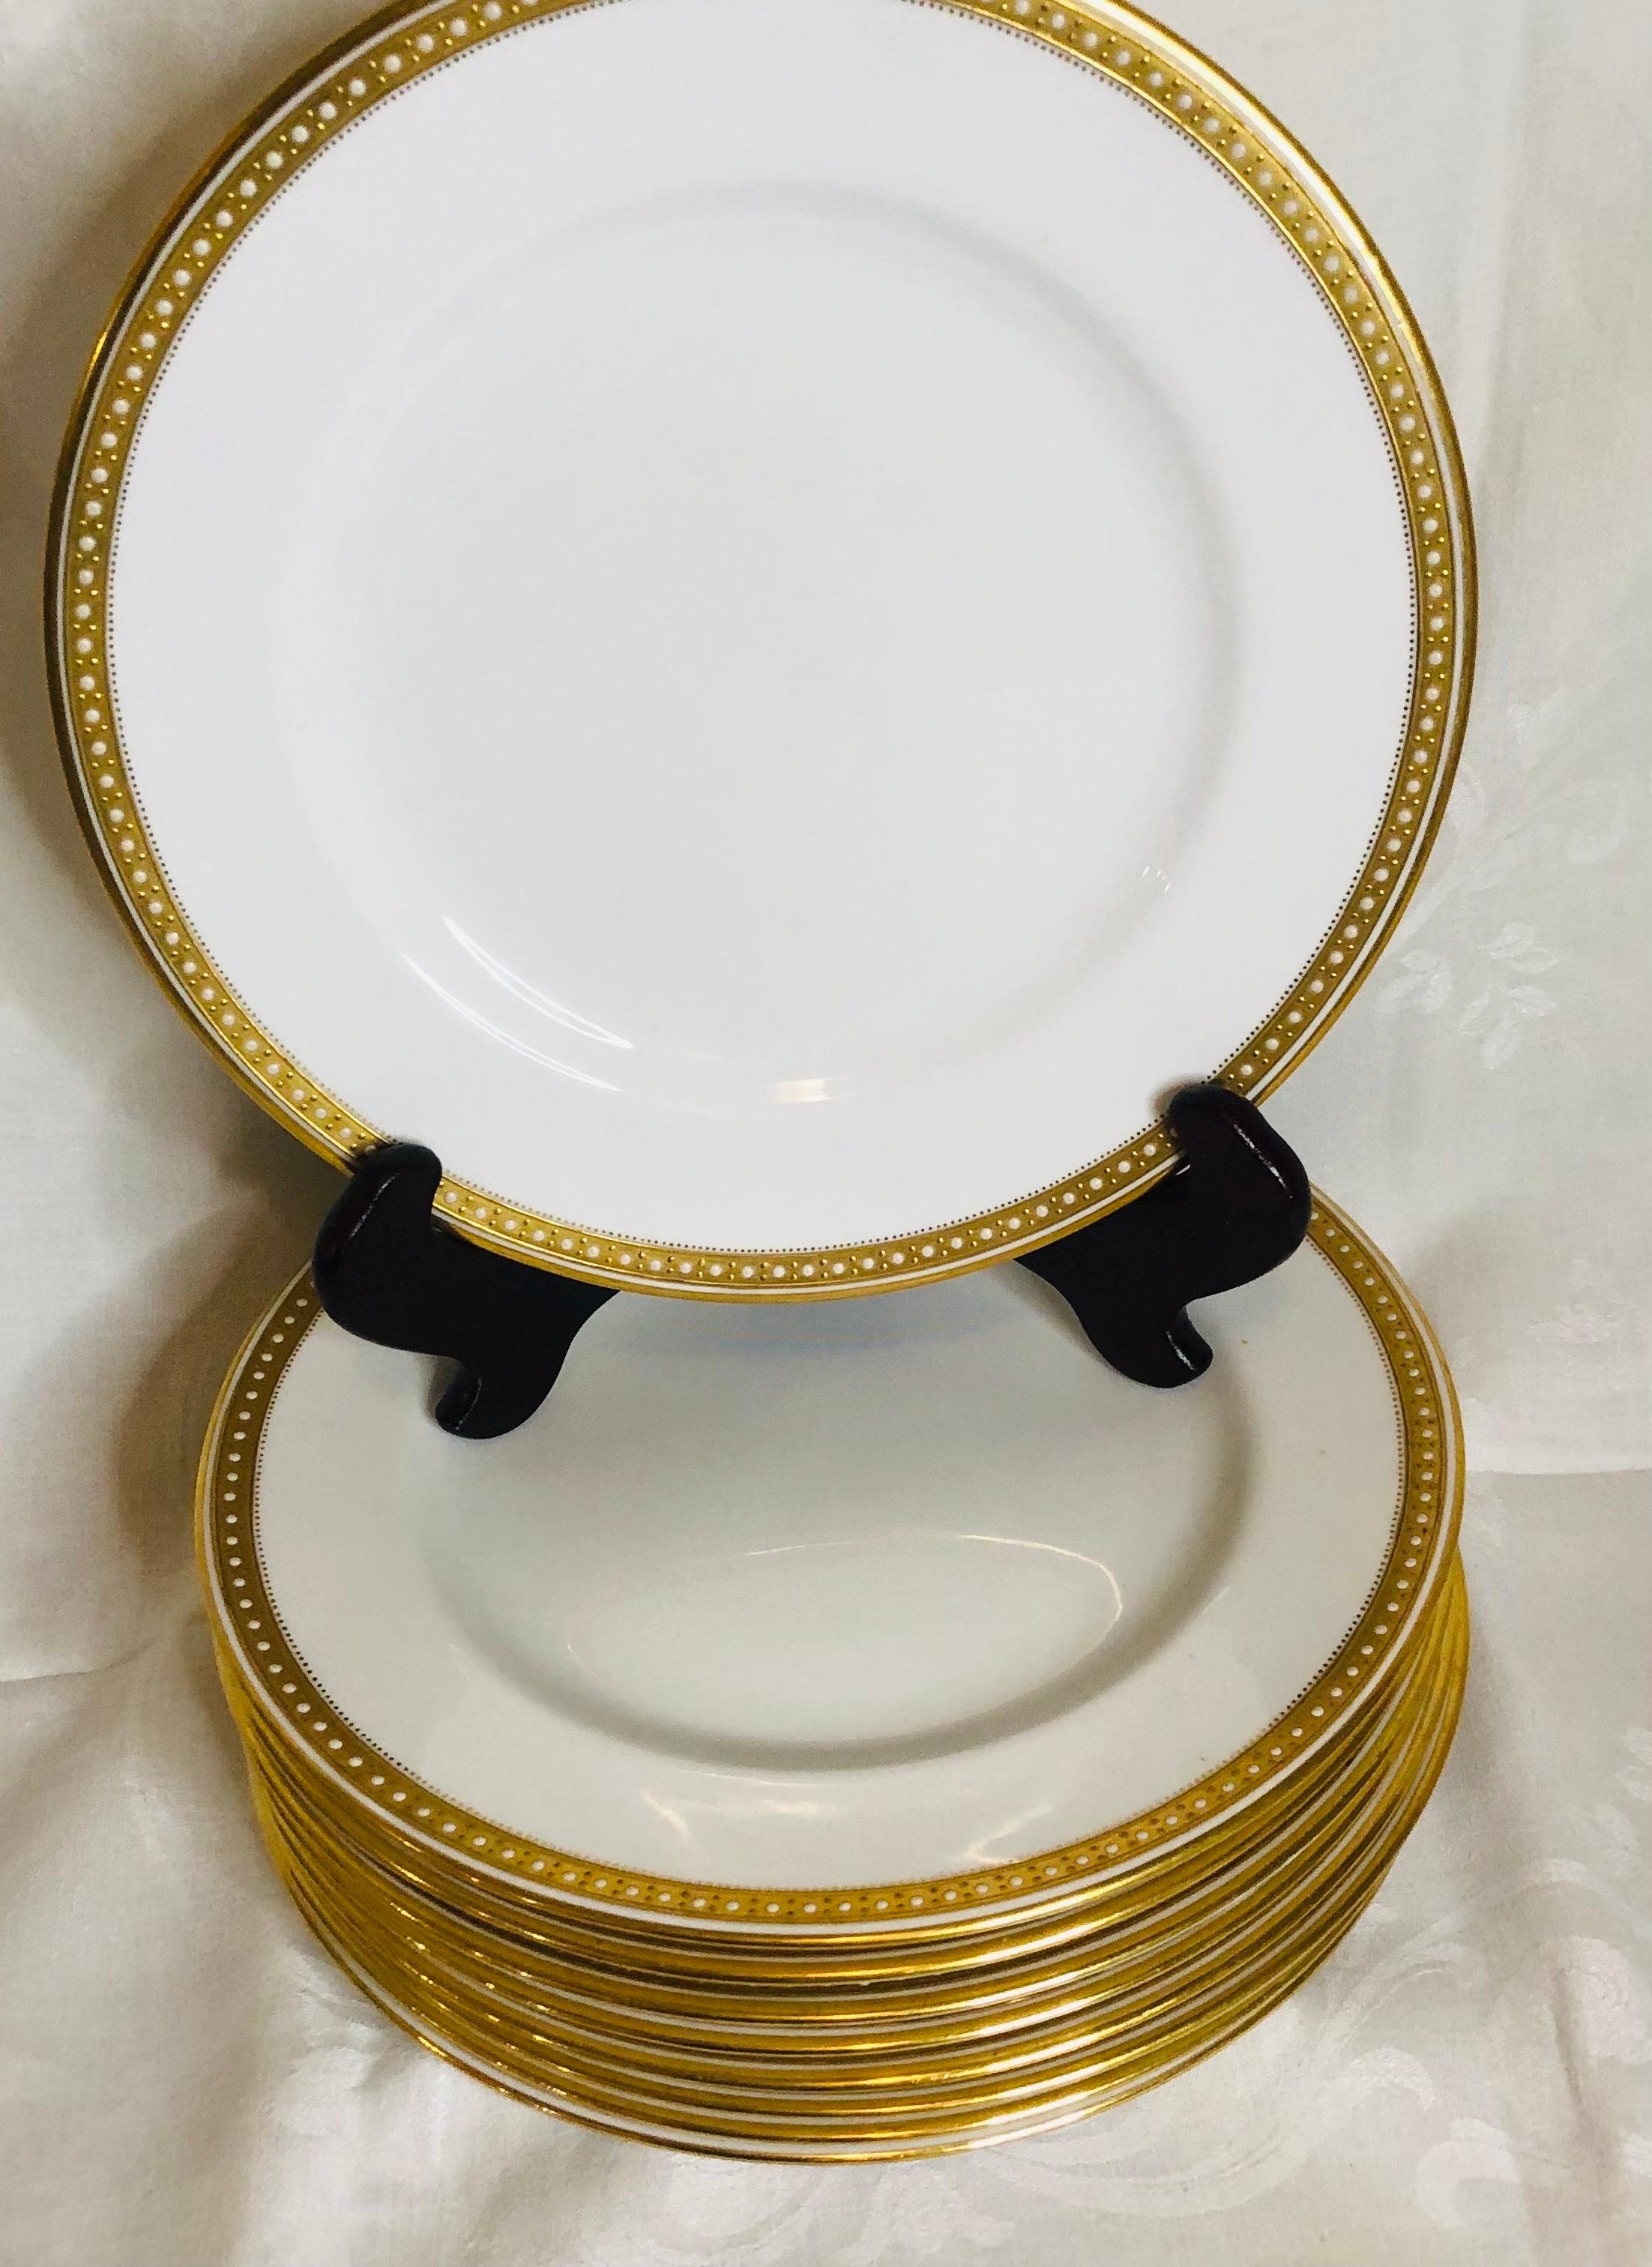 Gilt 16 Copeland Spode Dinner Plates with Gold Rim & White Jeweling Made for T. Goode